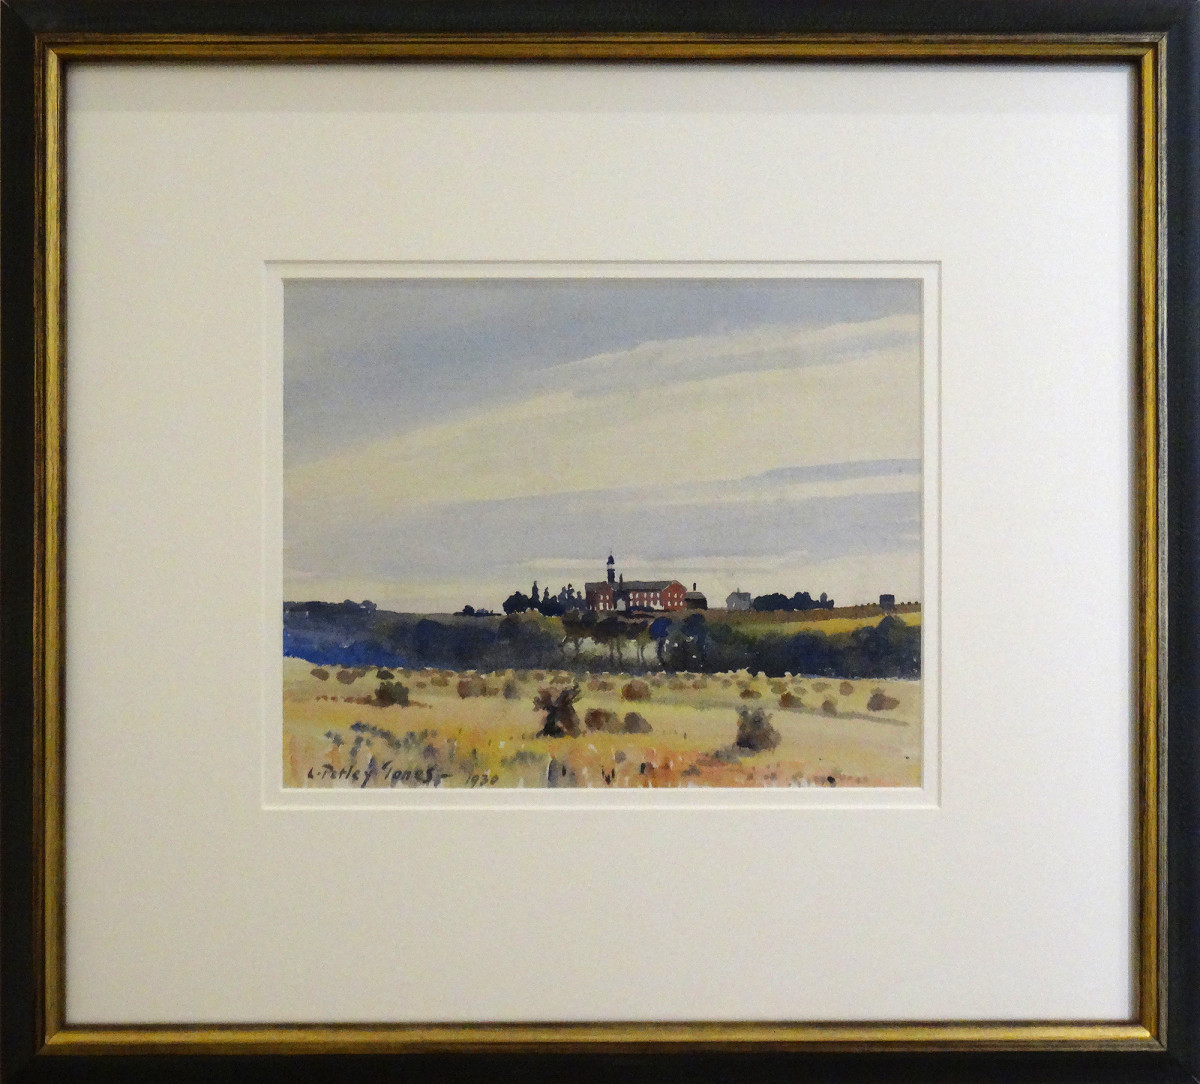 2362 - The Monastery on the Hill by Llewellyn Petley-Jones (1908-1986) 